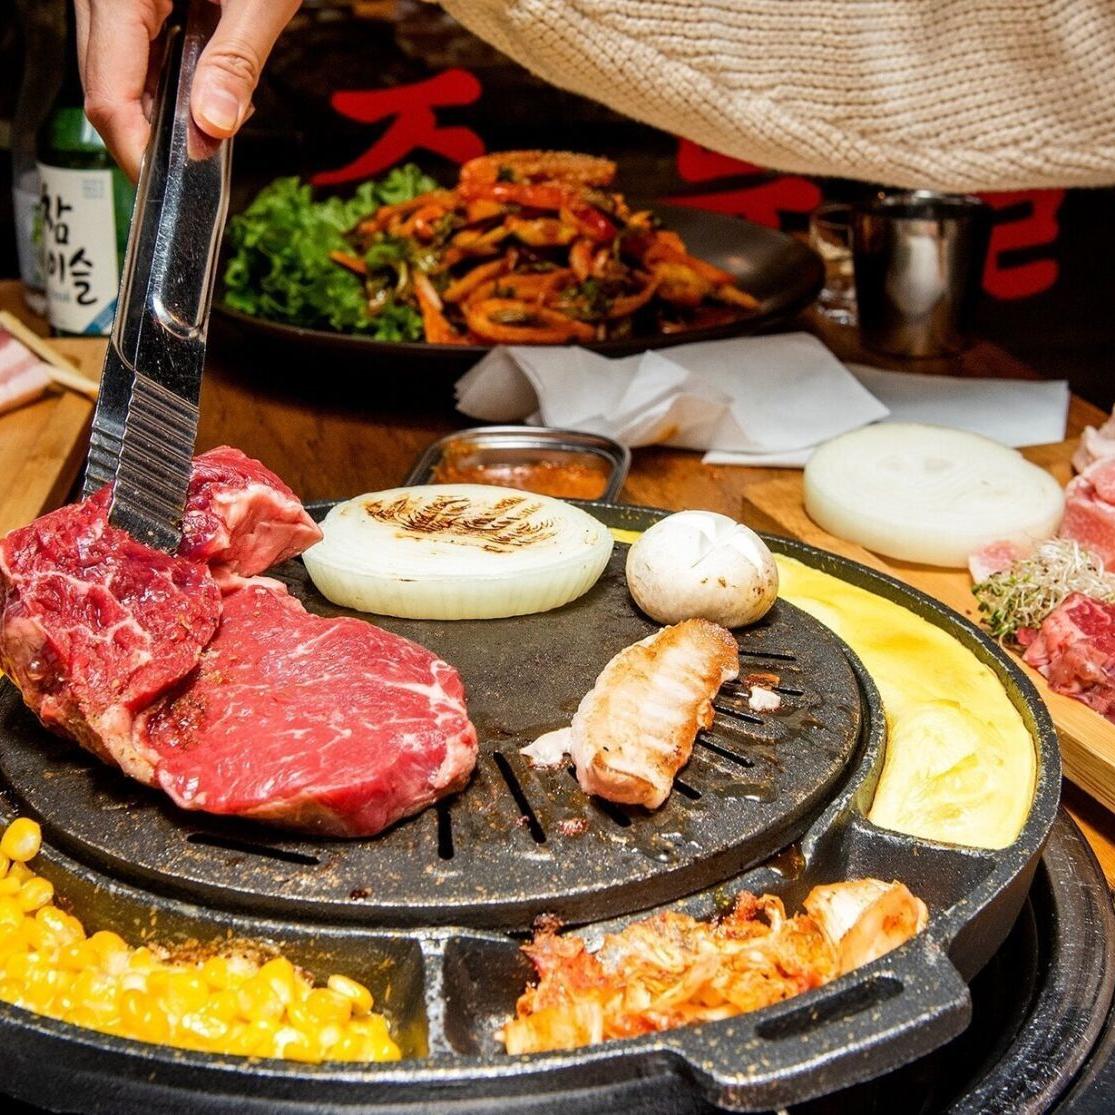 At Daldongnae Korean BBQ, the Wagyu ribeye was worth it